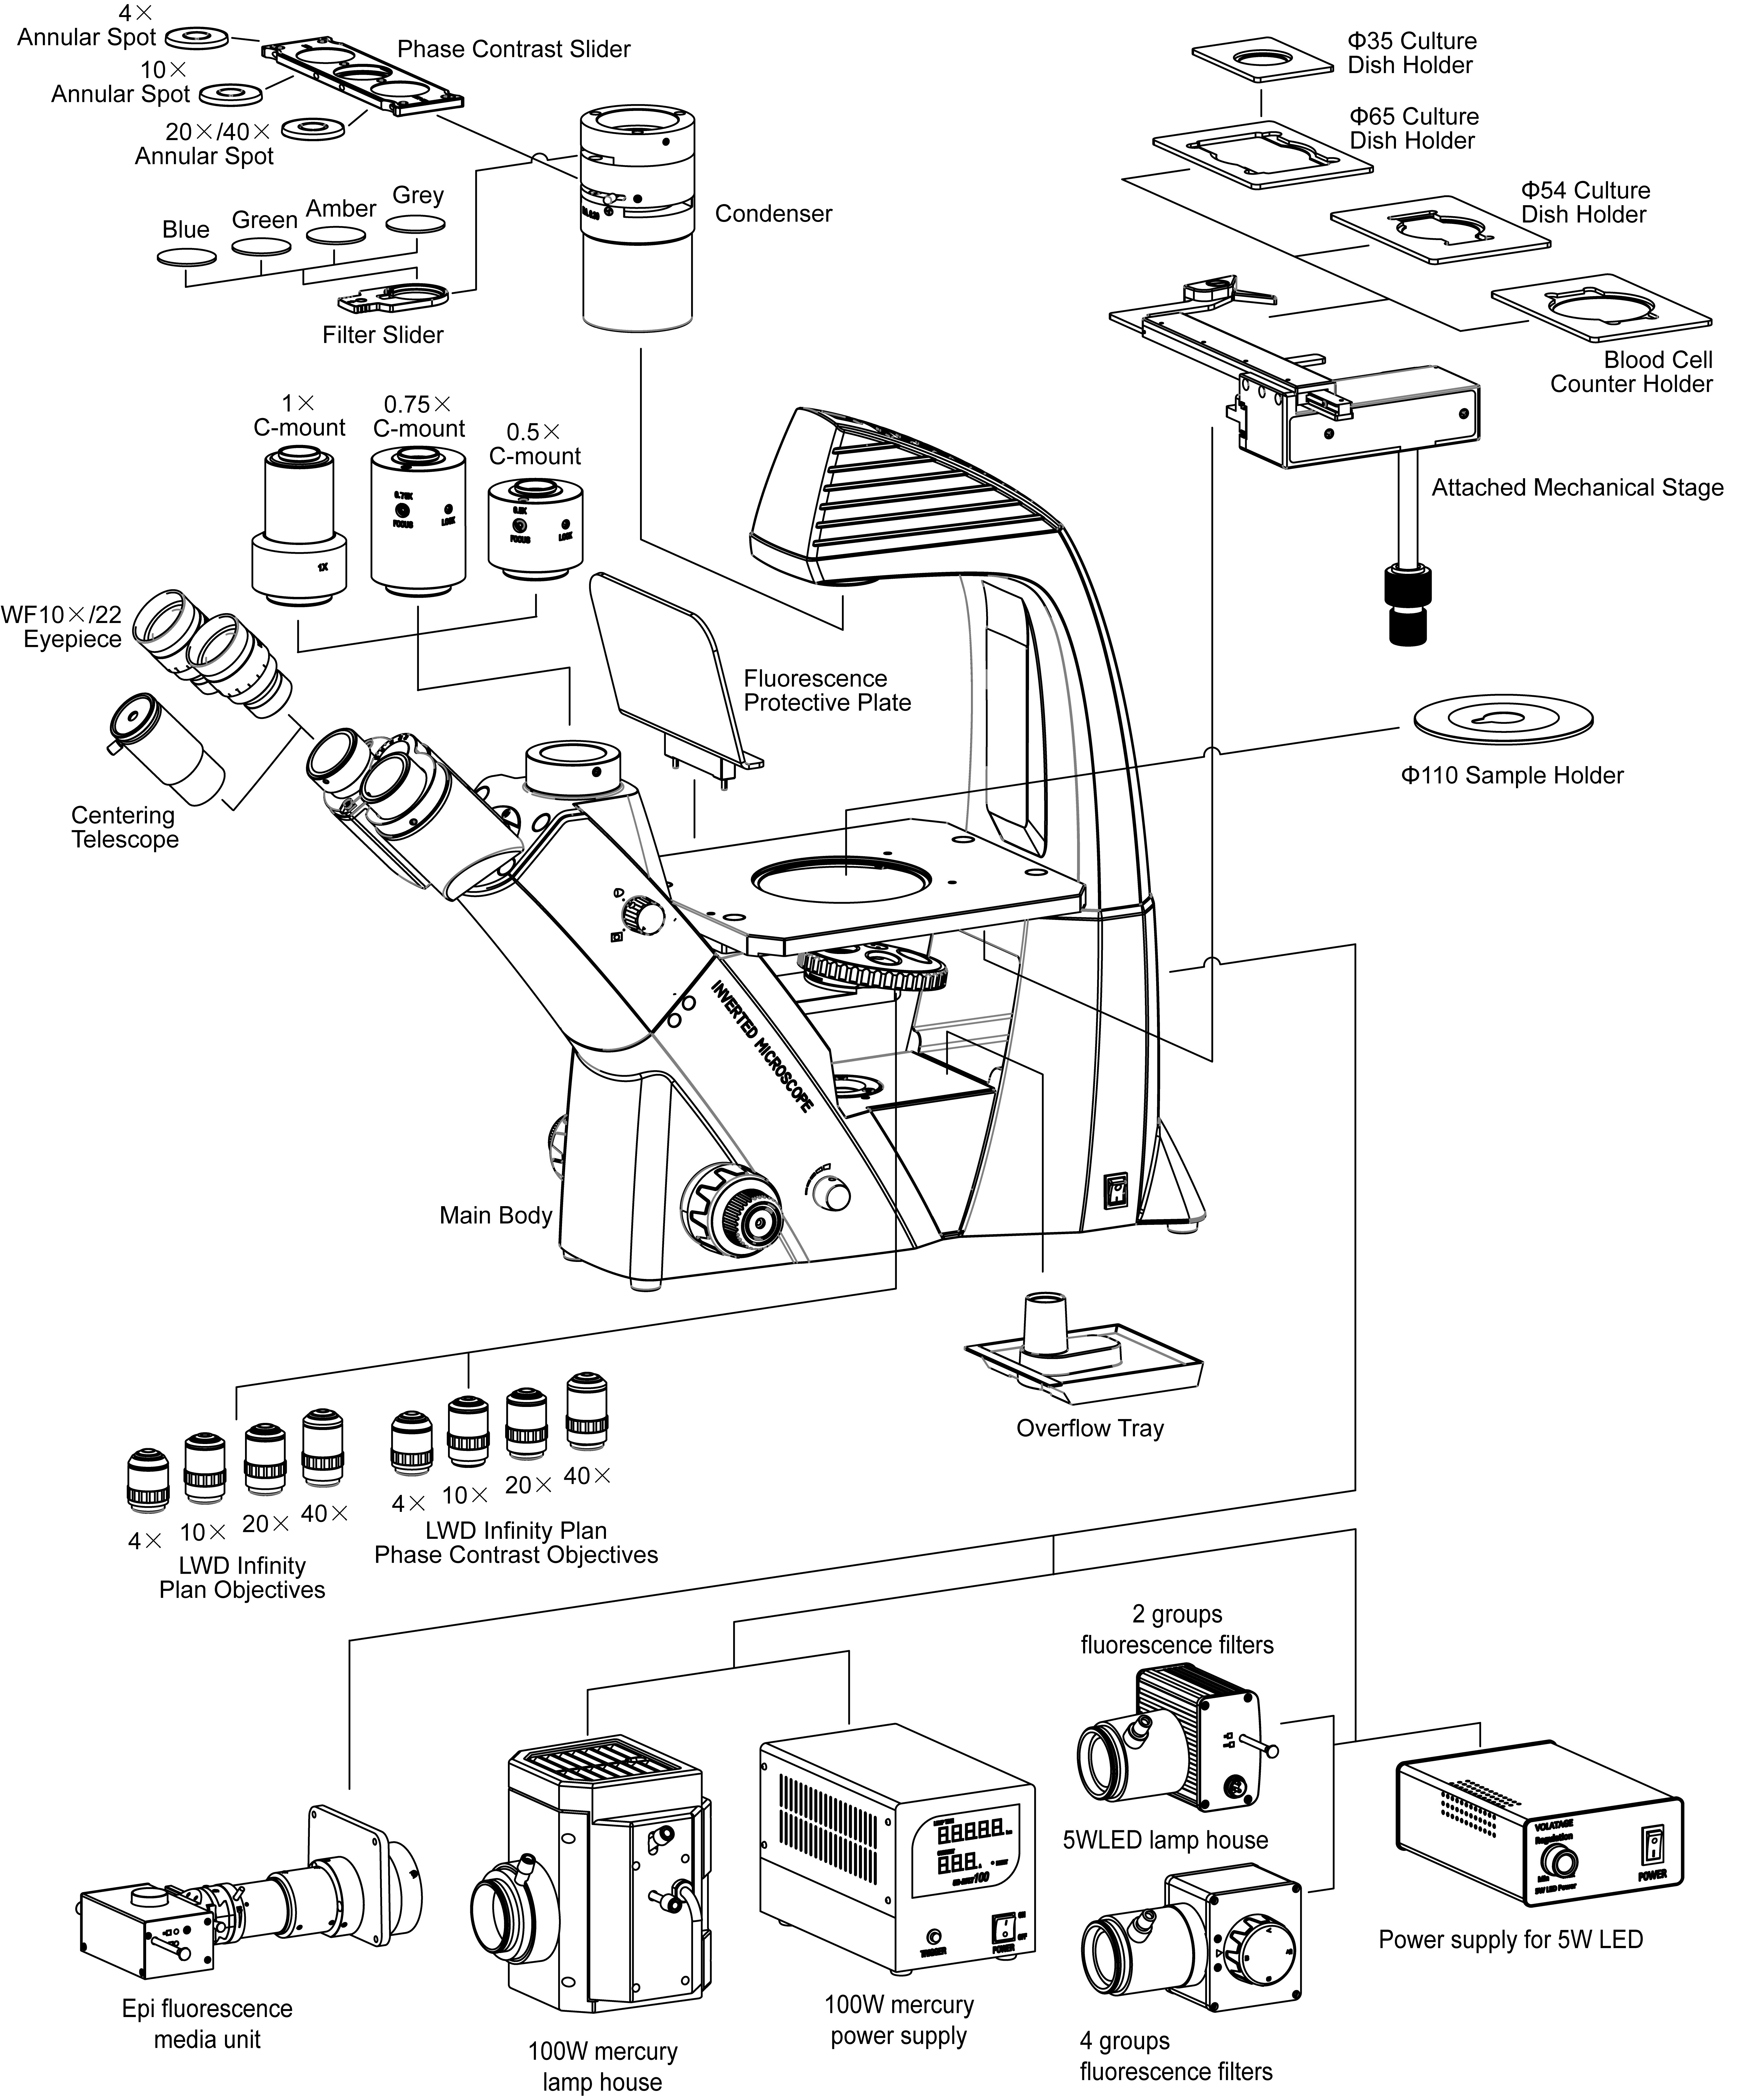 Diagram Sistem BS-2093A